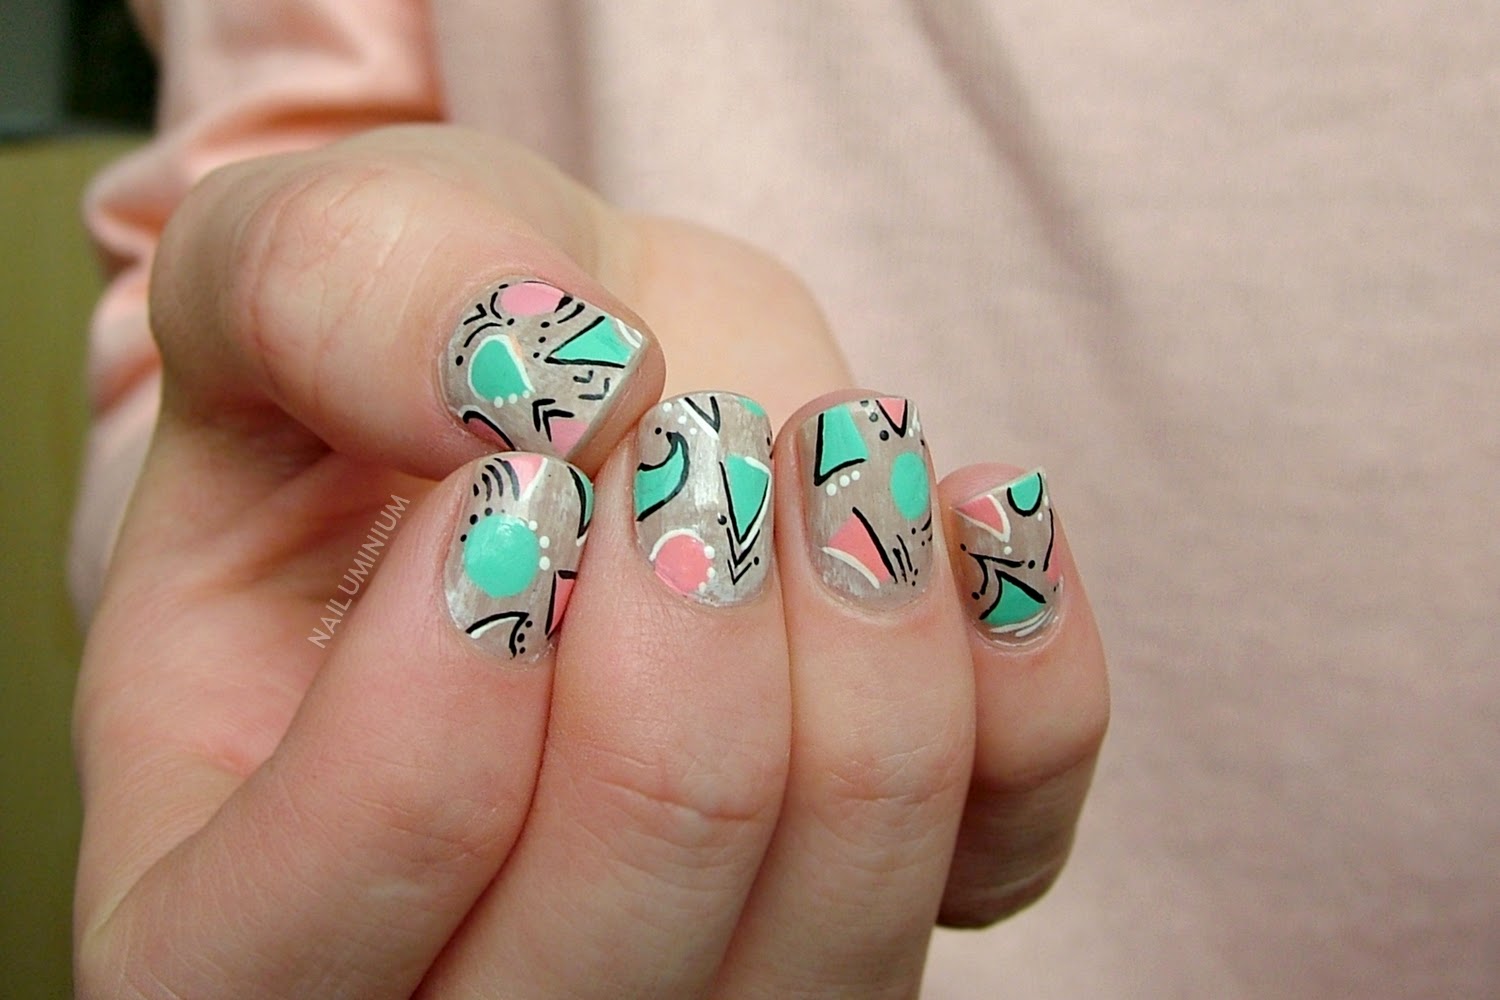 1. Pastel Nail Art Ideas on Pinterest - wide 1